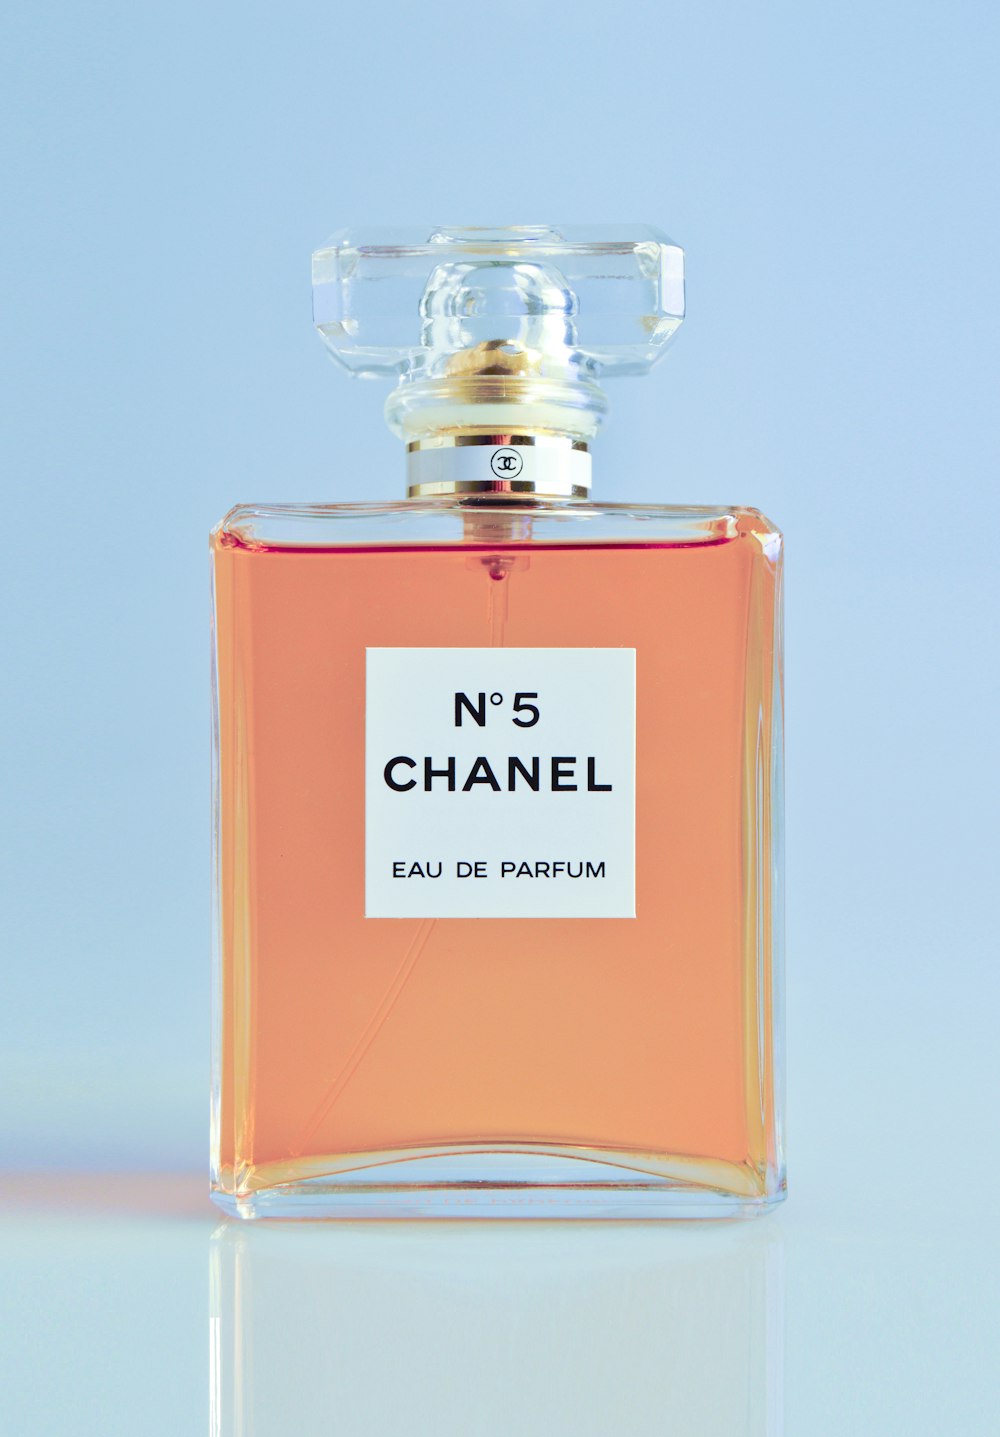 N5 Chanel eau de parfum flacone spray